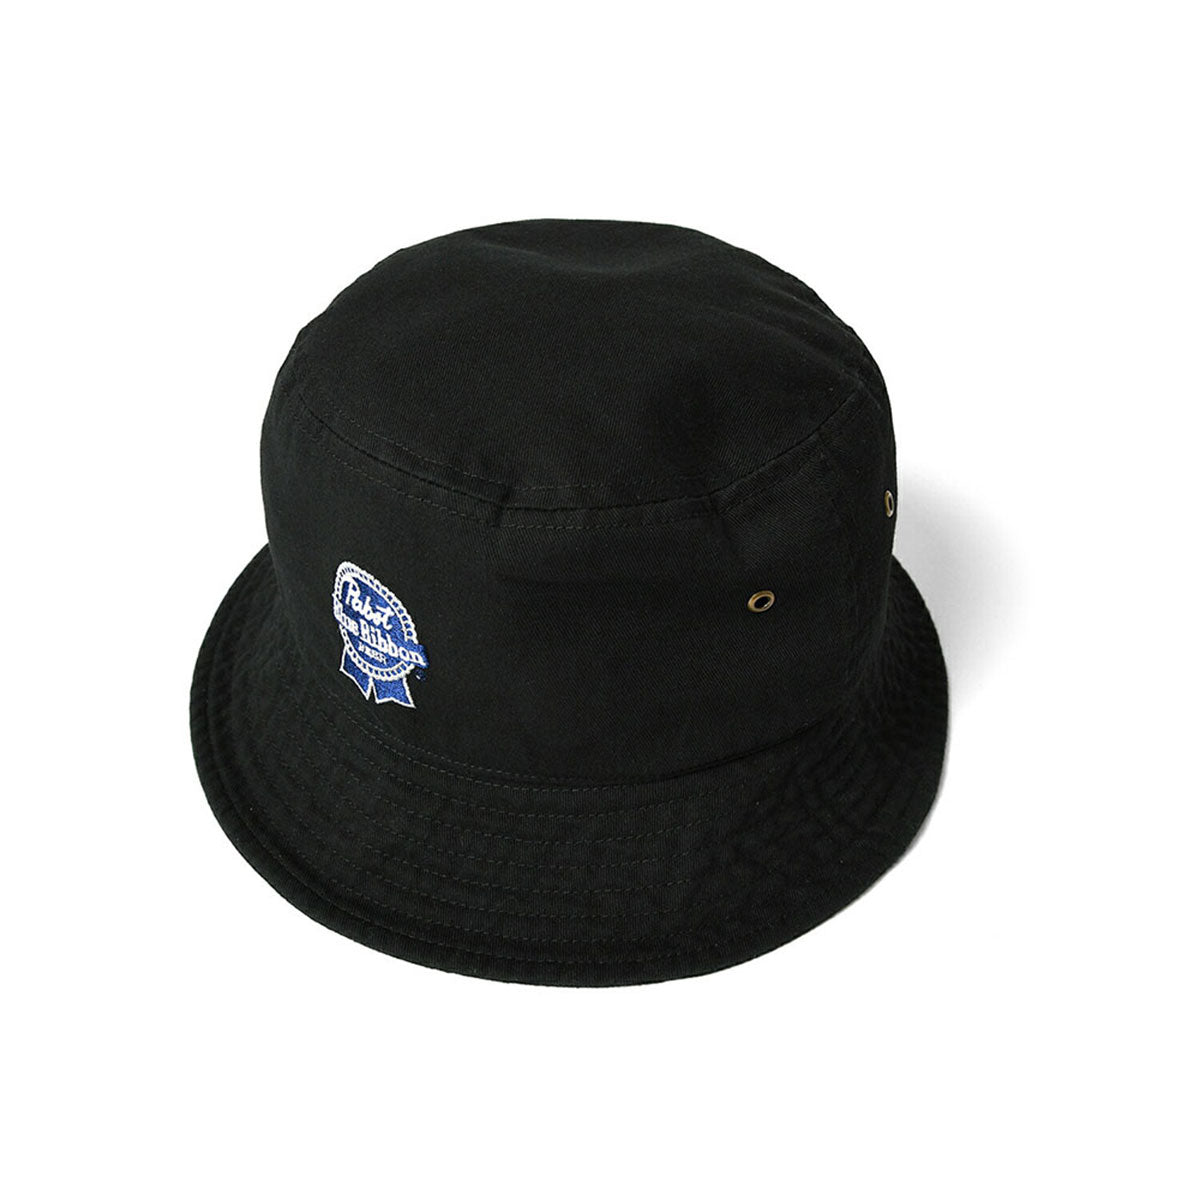 PABST BLUE RIBBON LOGO BUCKET HAT BLACK [PB211405]